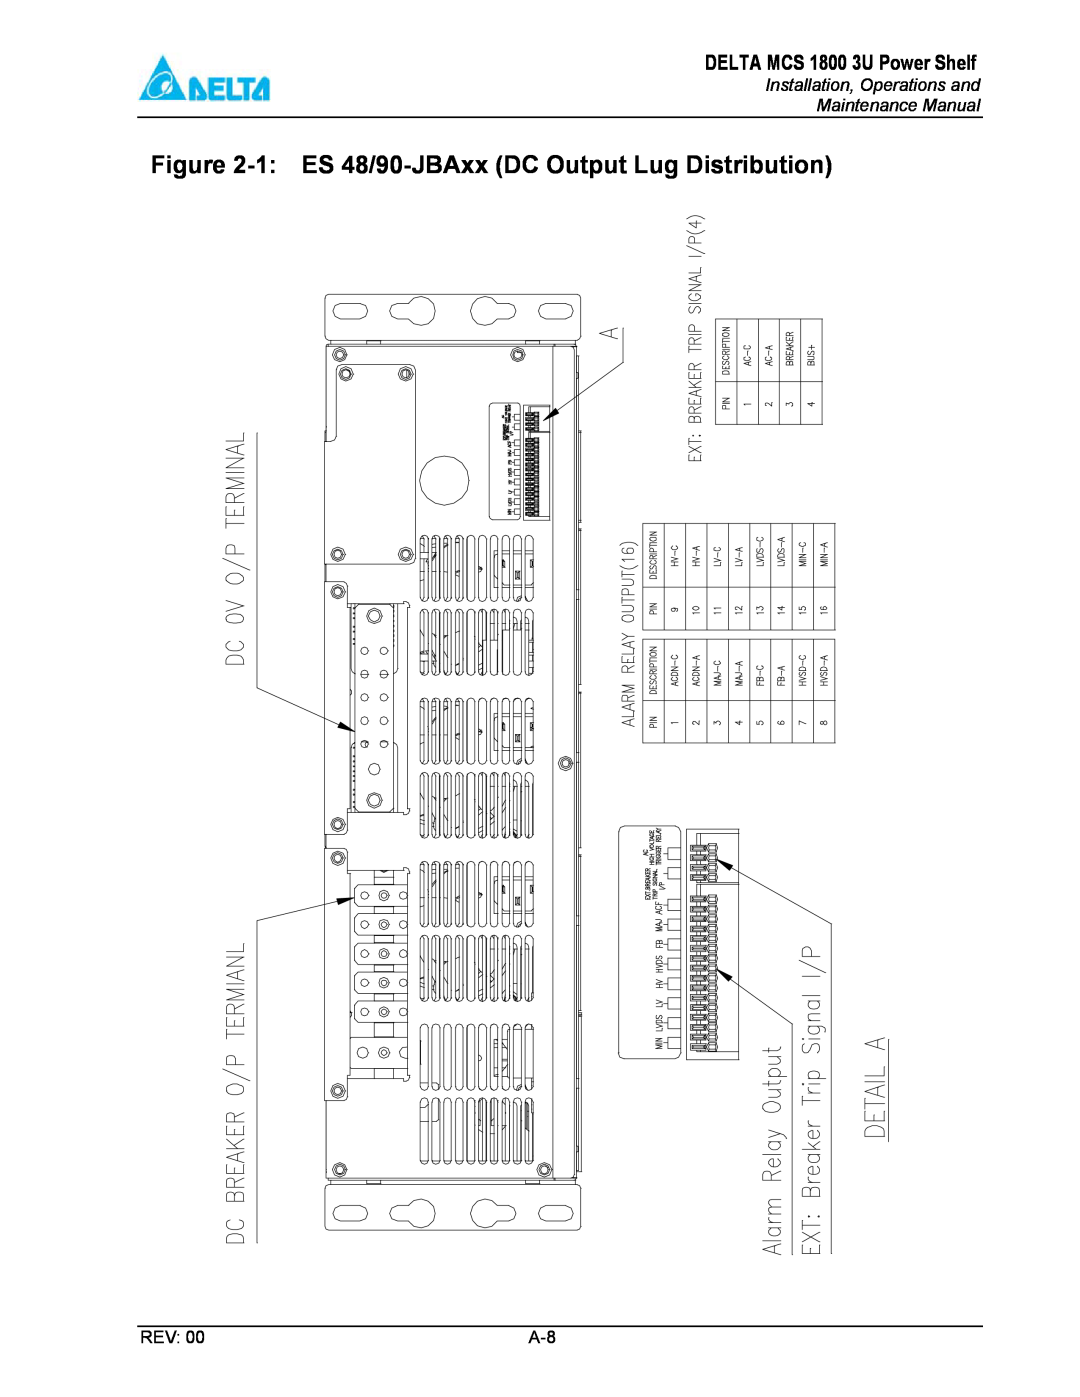 Delta MCS-1800 manual 1 ES 48/90-JBAxx DC Output Lug Distribution, DELTA MCS 1800 3U Power Shelf 